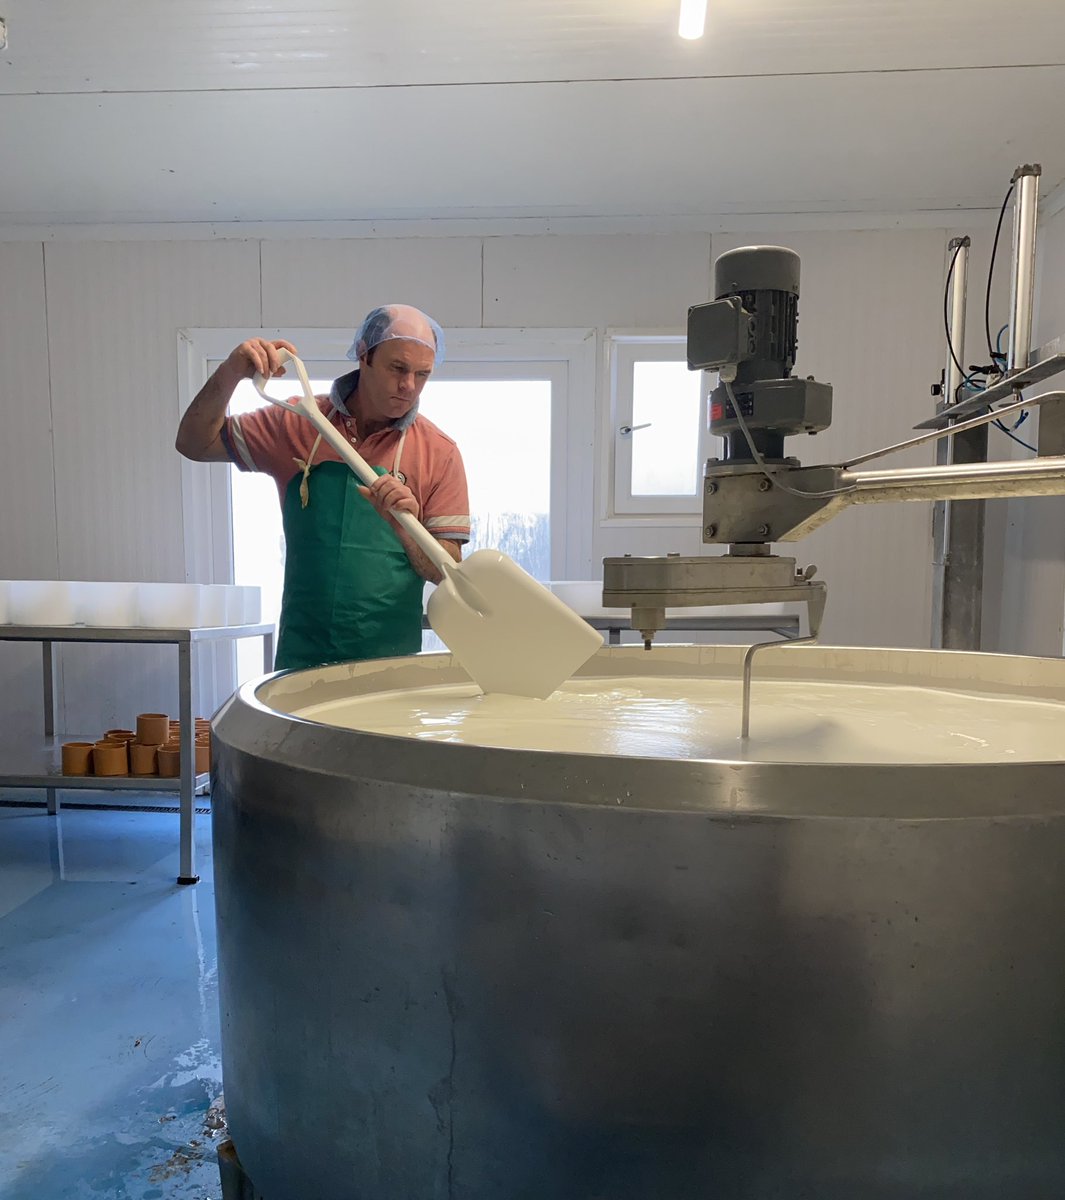 Very happy to be making cheese today in our hot steamy cheesemaking room ! 
#irishfarmhousecheese #goatscheese #irishfood #frostymorning #ireland